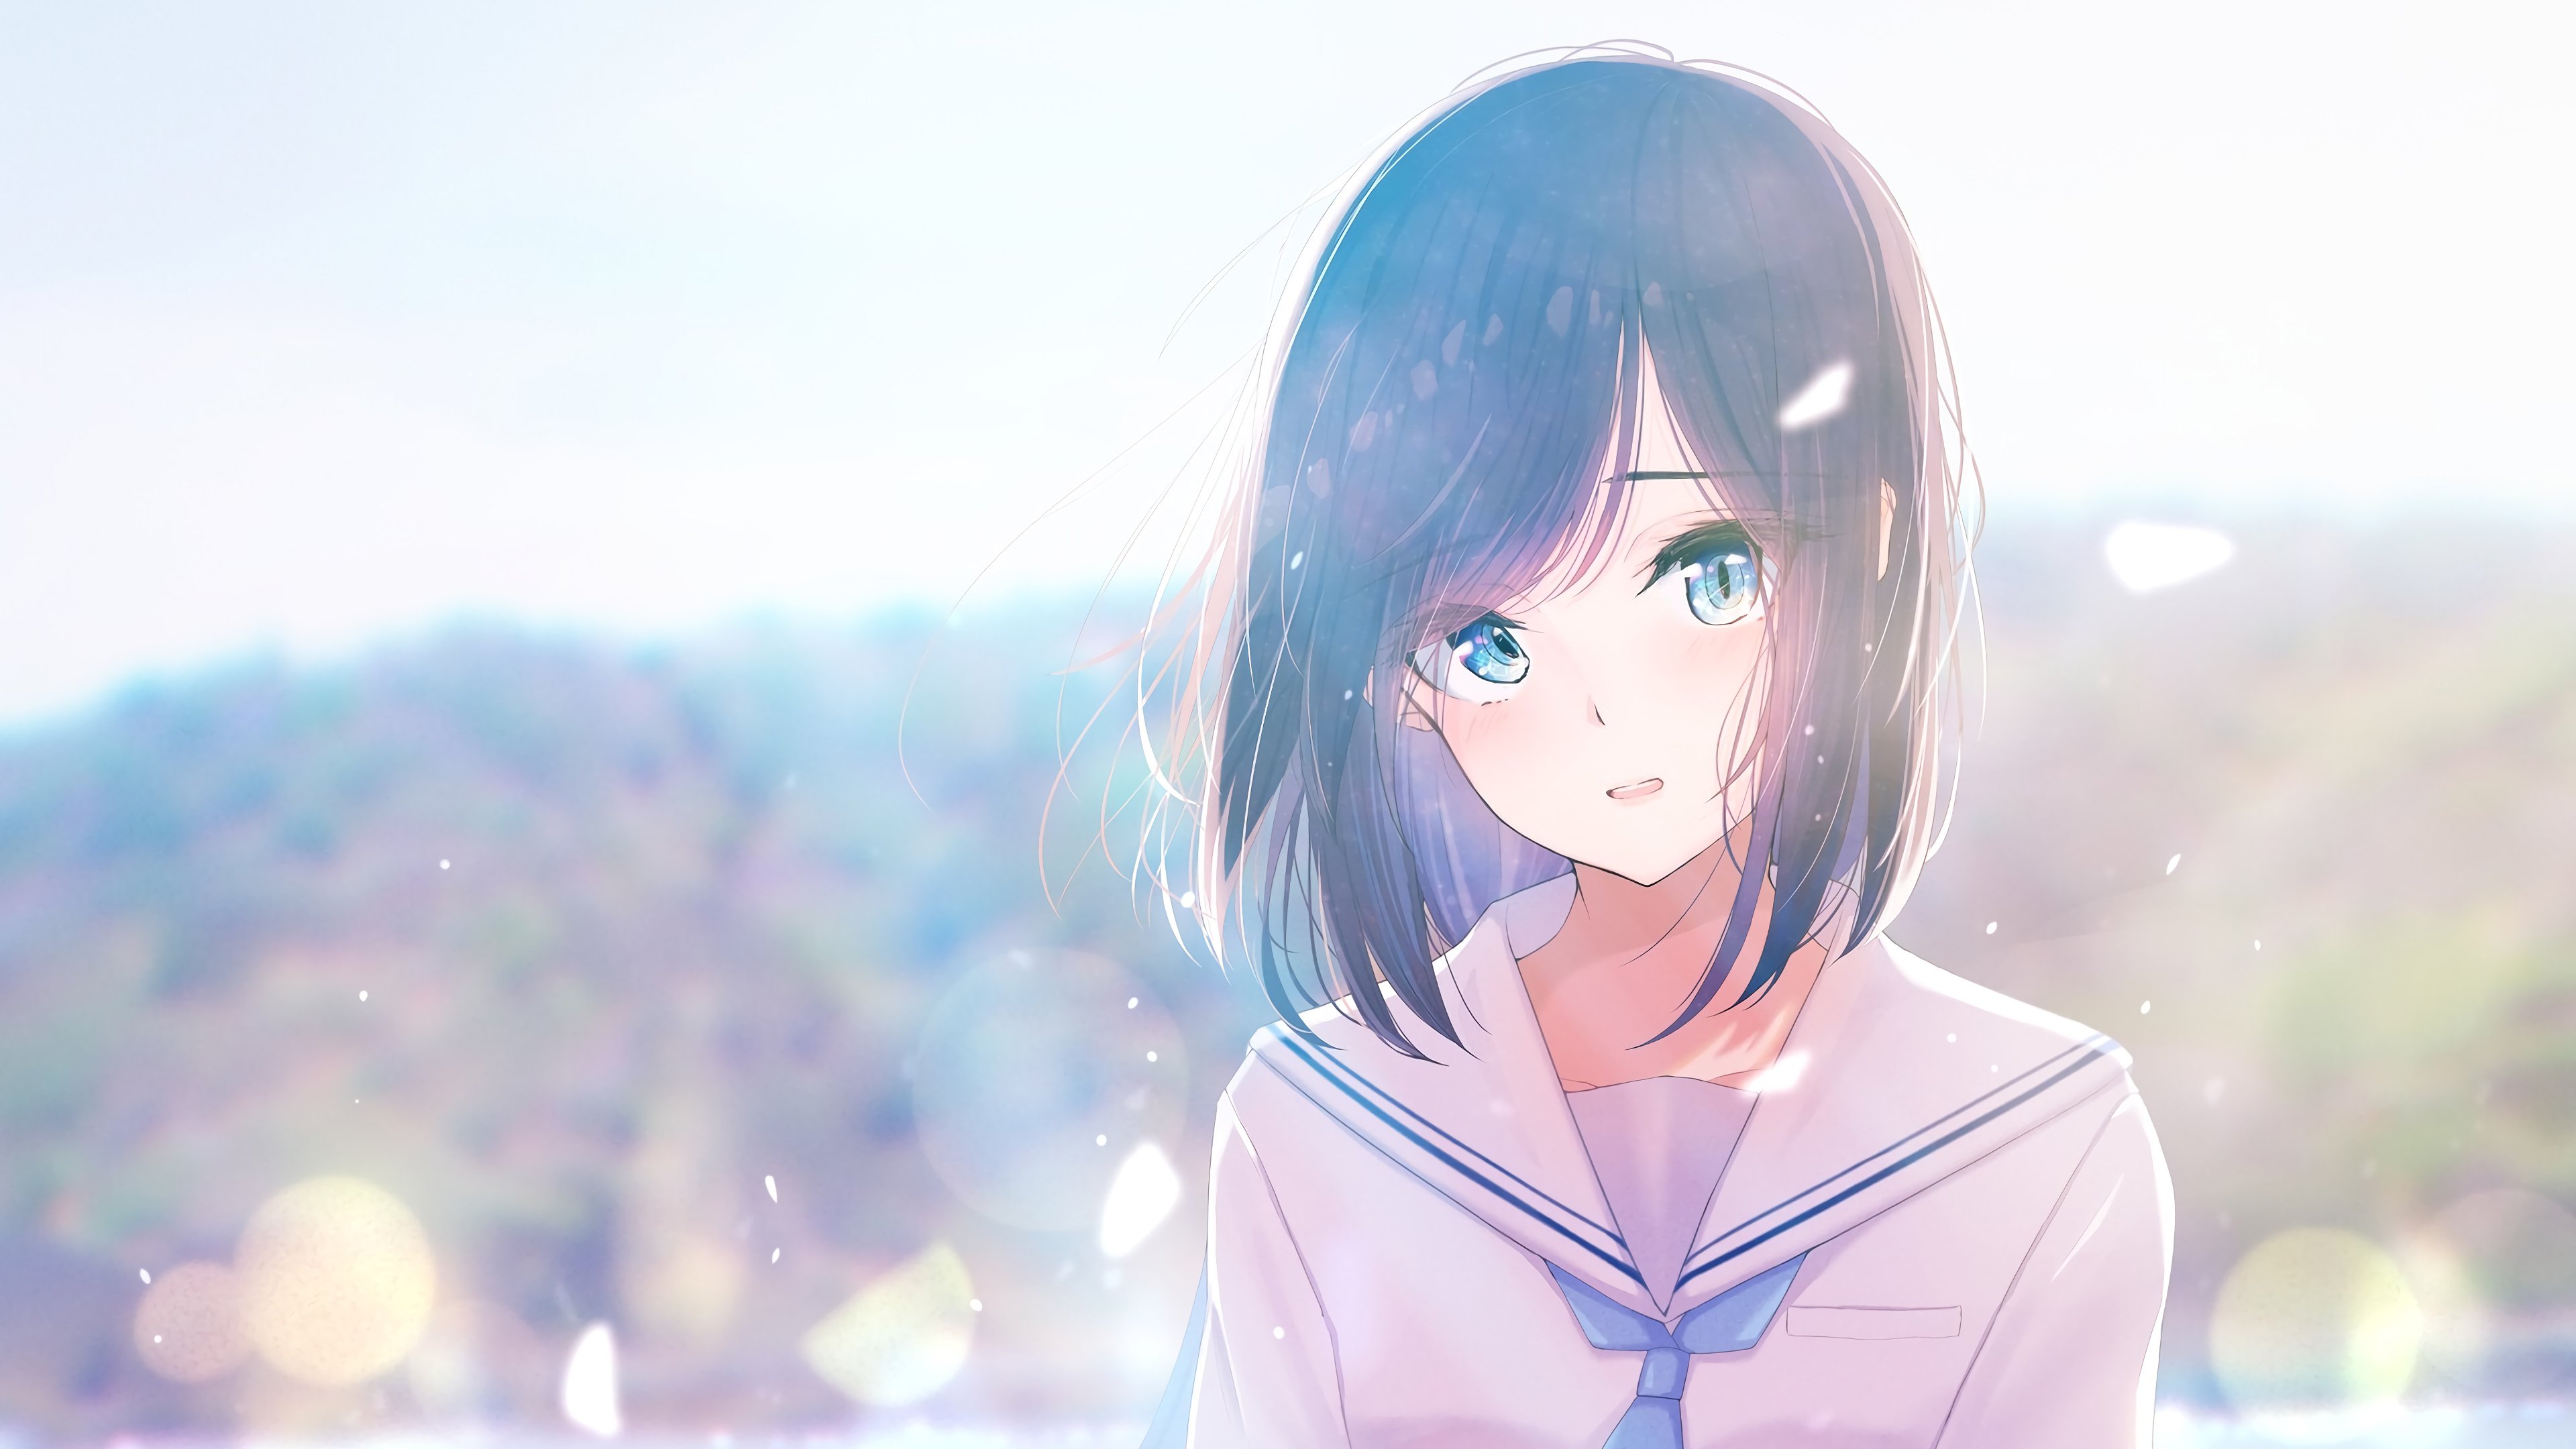 Fondos de pantalla Anime chica estudiante de uniforme